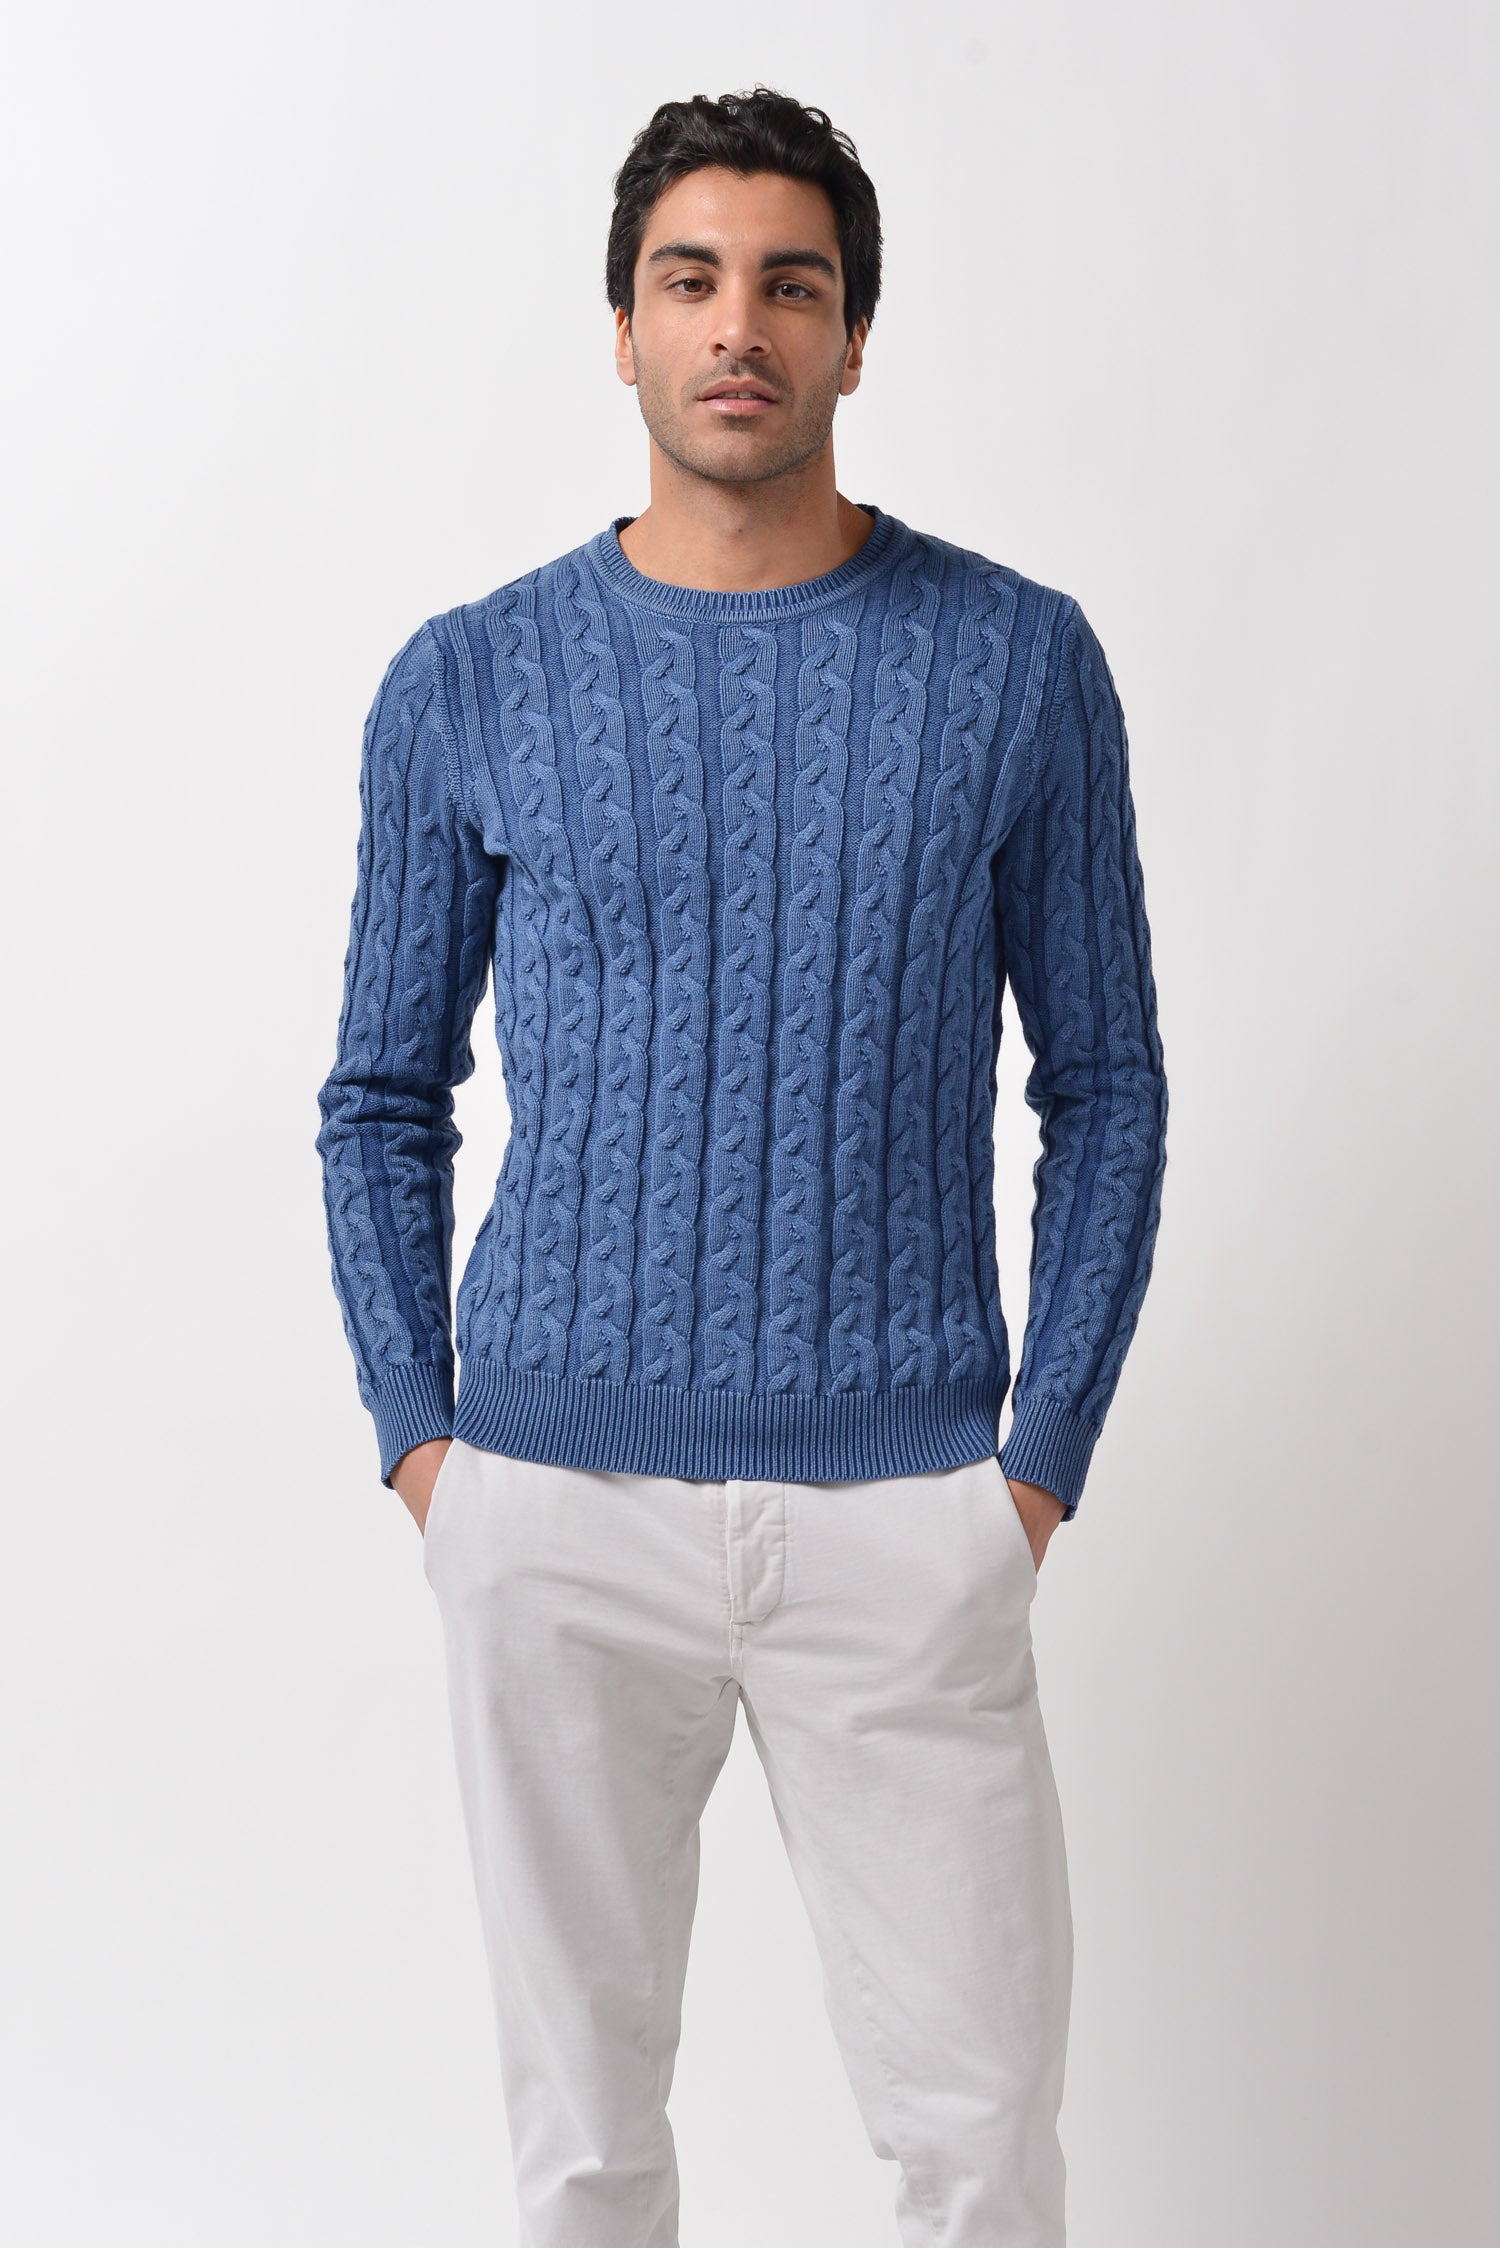 Pinter Iced Art Sweater - Pacific